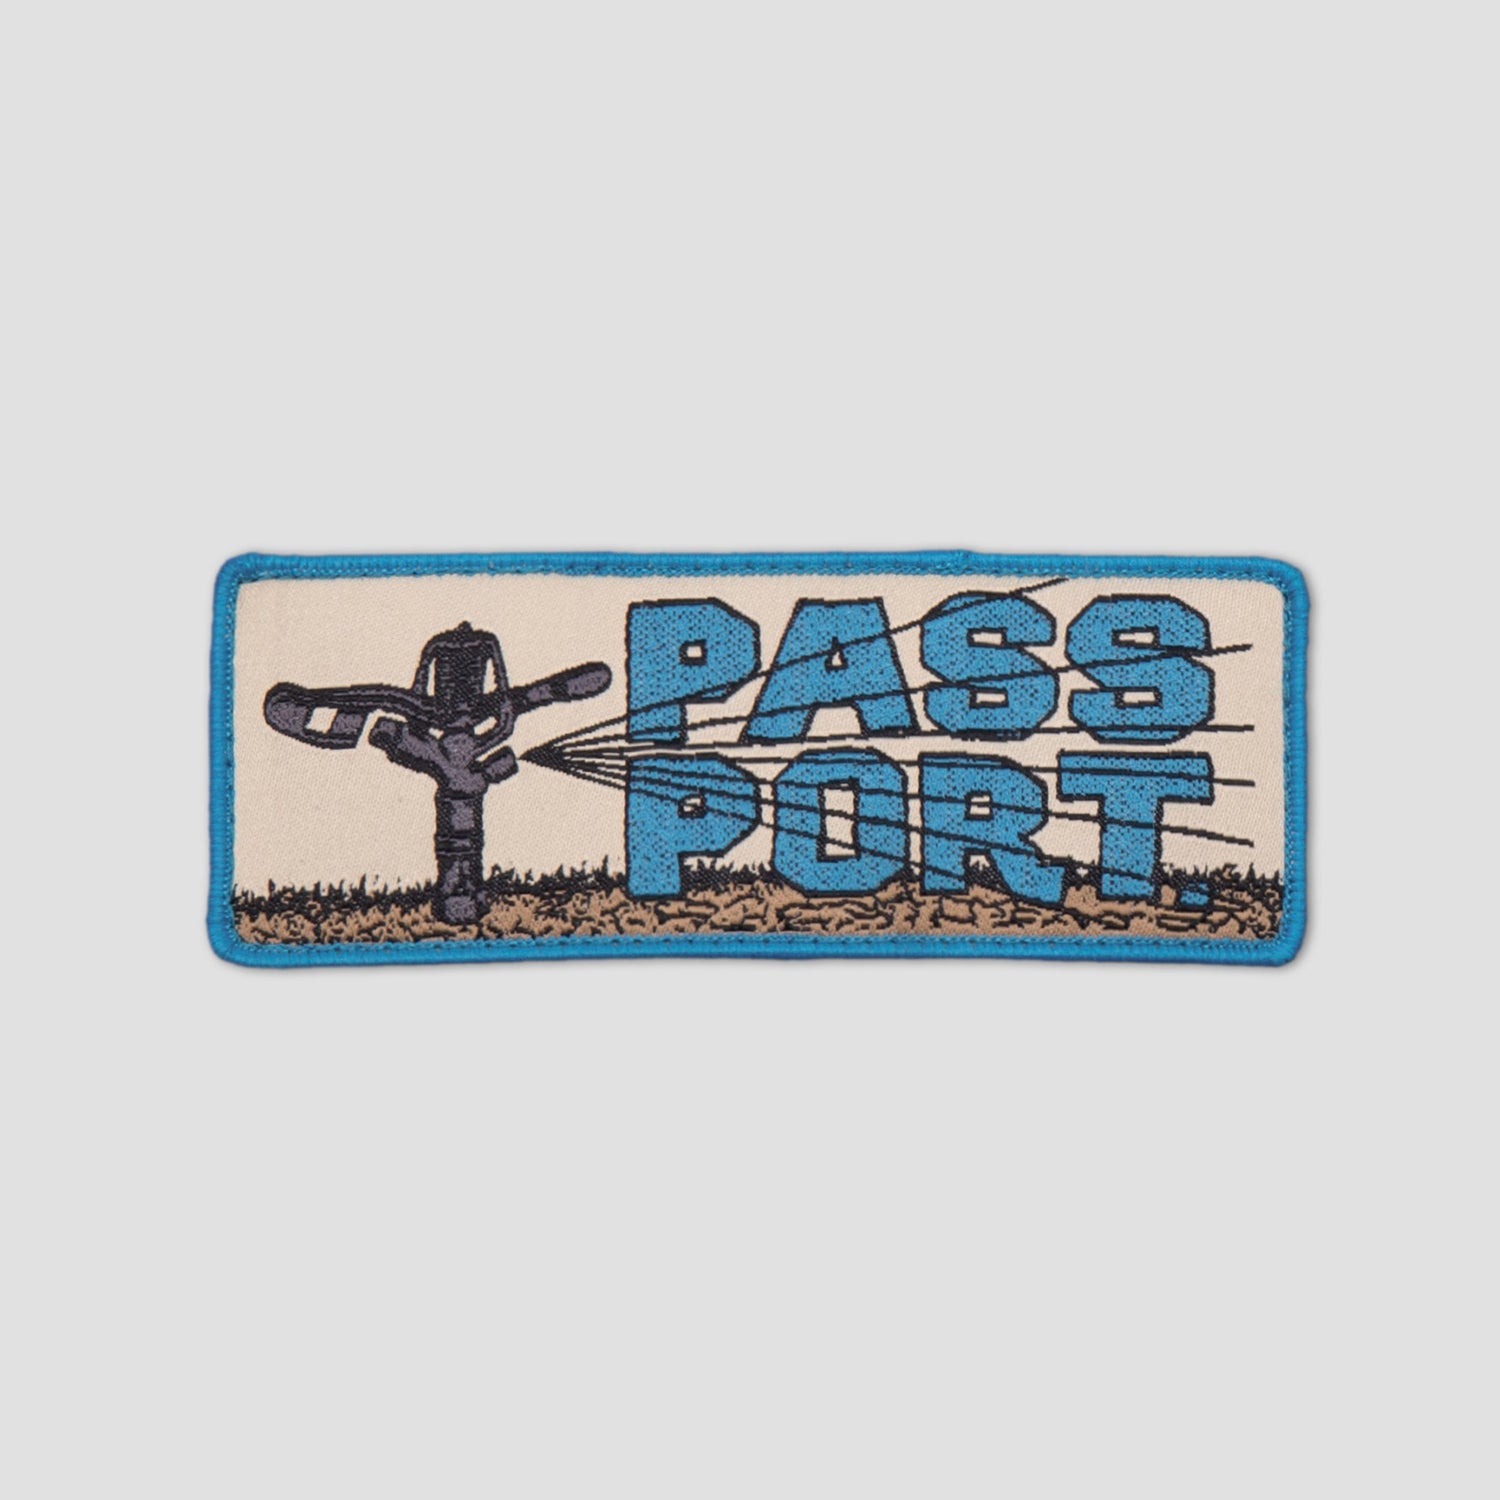 Pass~port